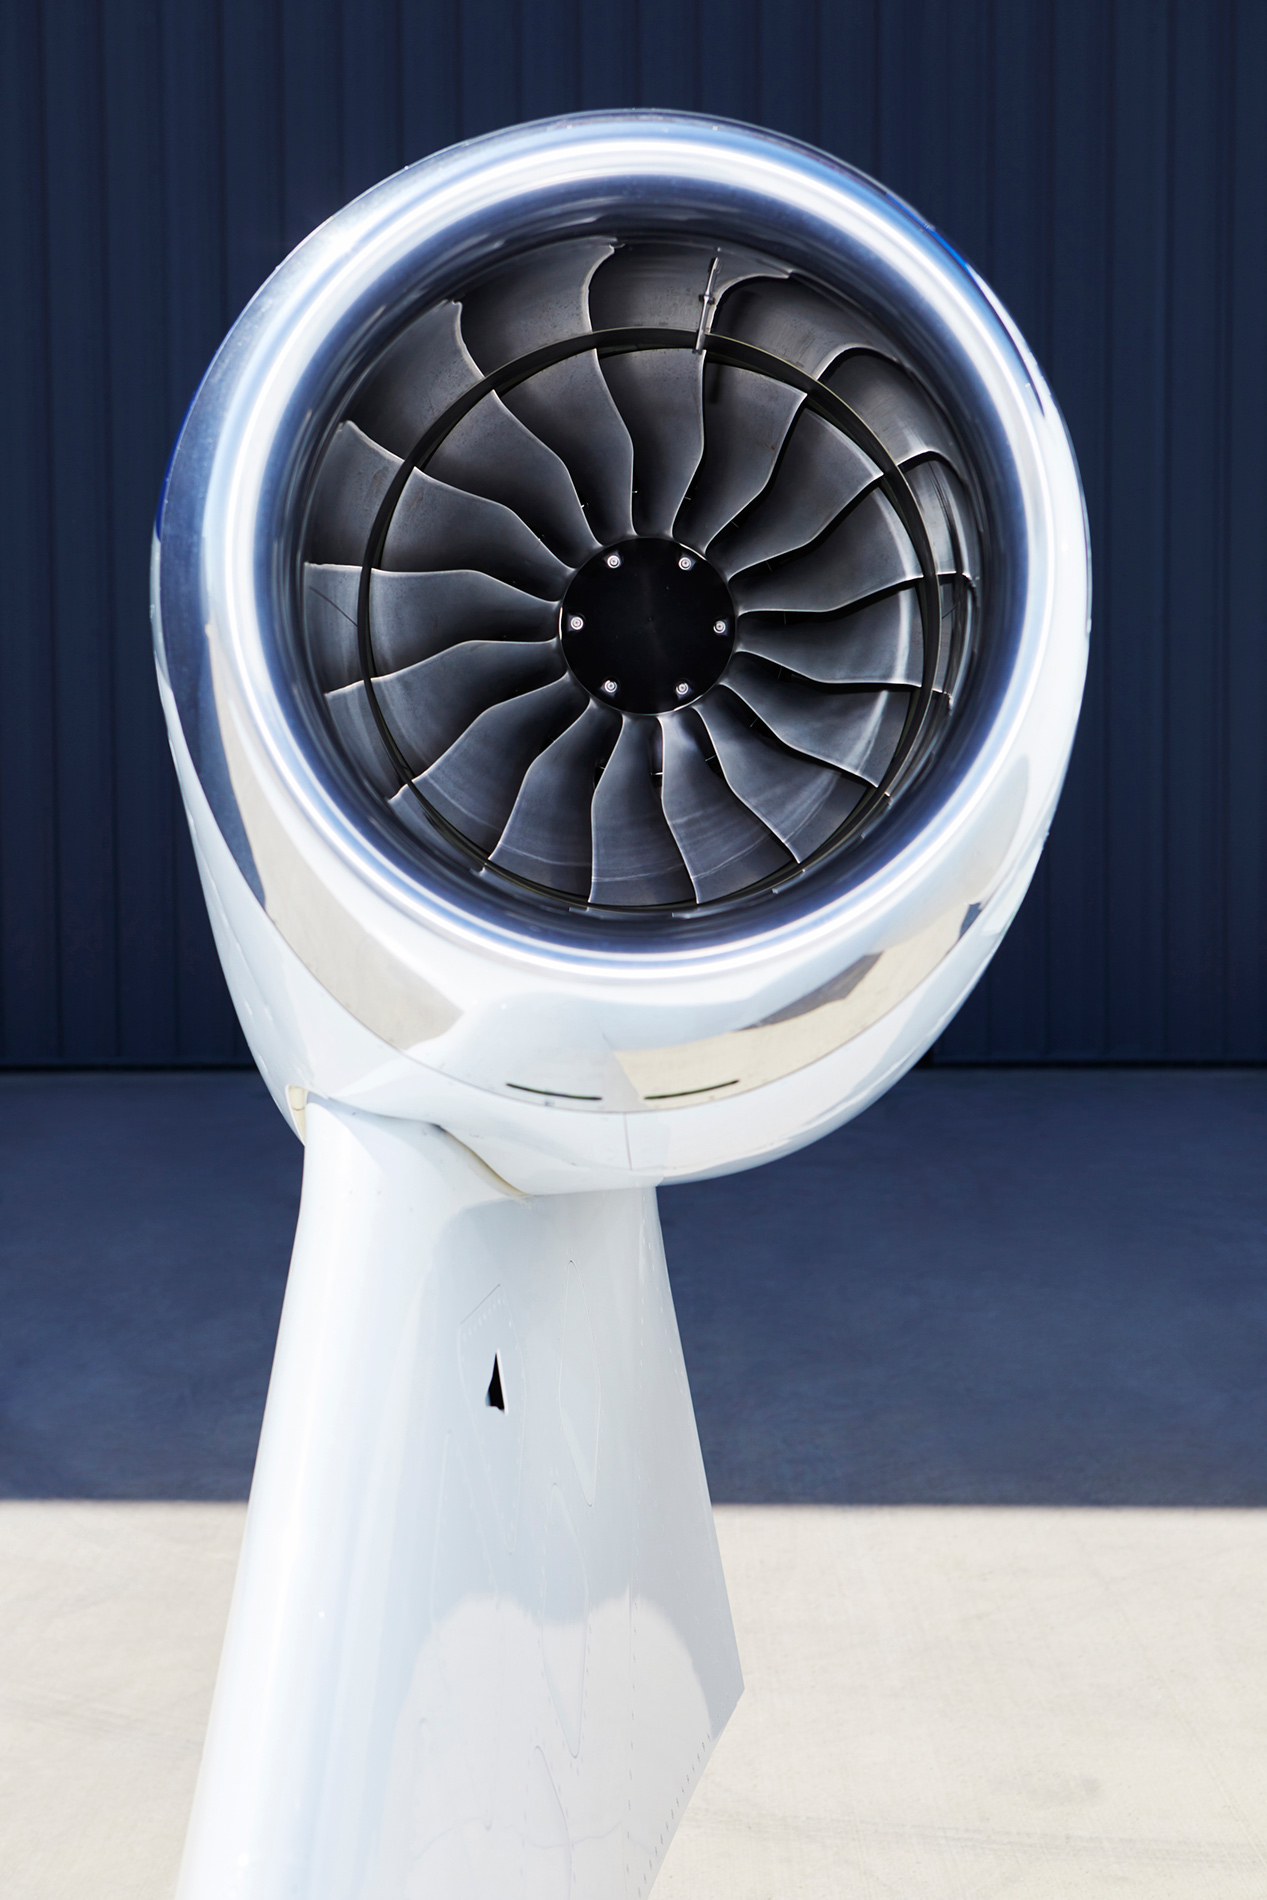 HondaJet Engine - Steve Craft Photo -  Aviation Photographer Phoenix AZ